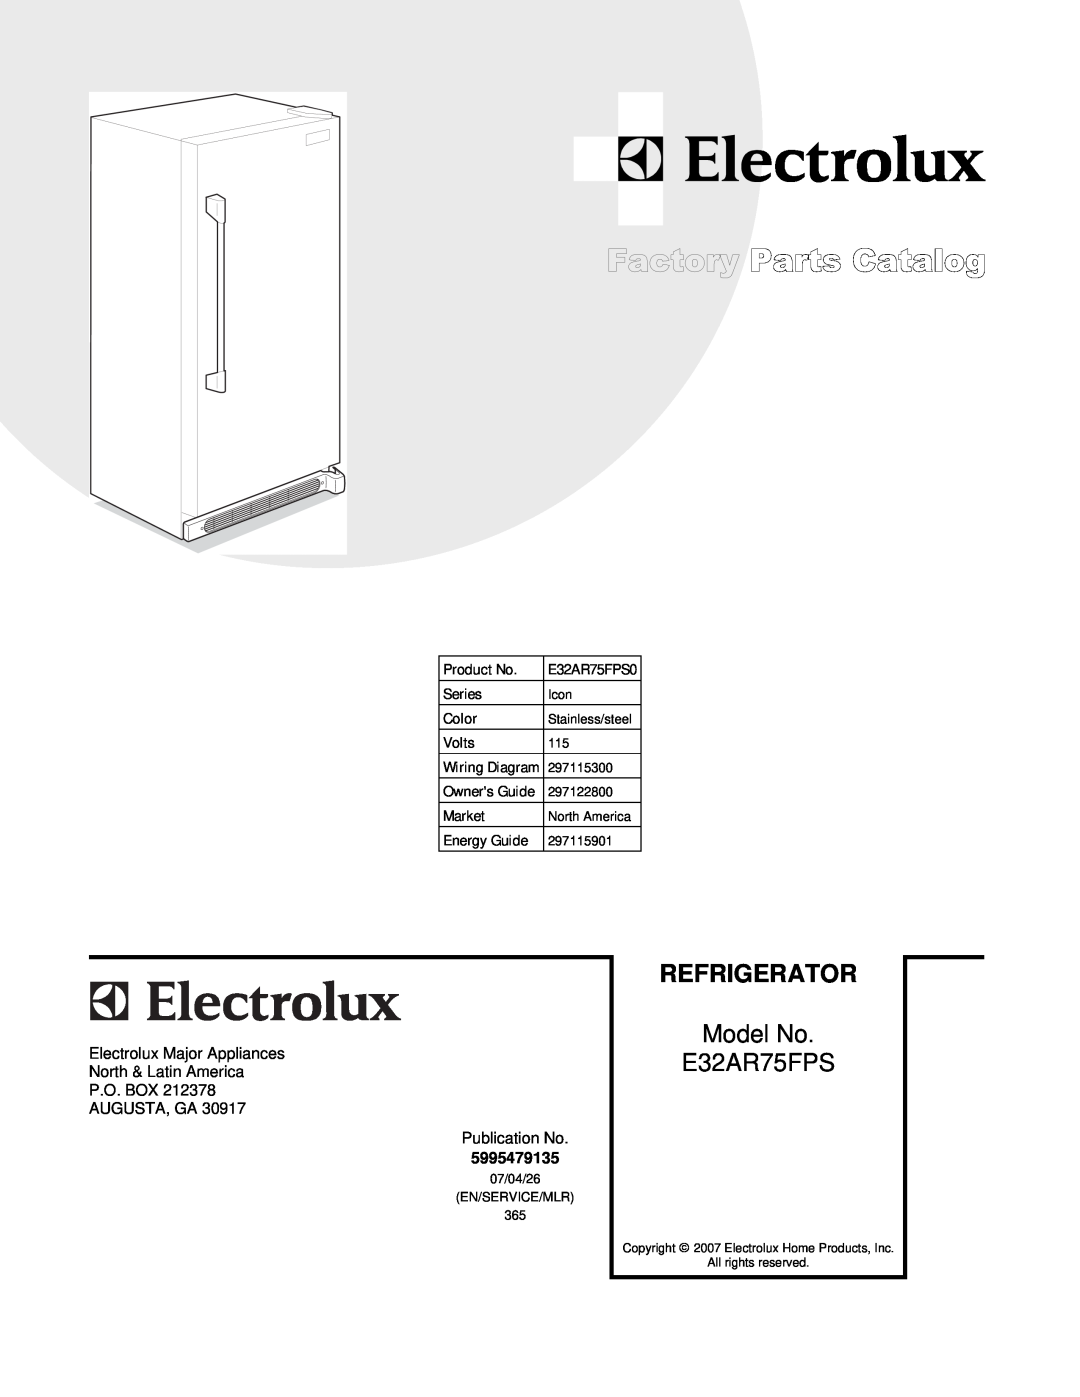 Electrolux E32AF75FPS0 manual Refrigerator, Model No E32AR75FPS 